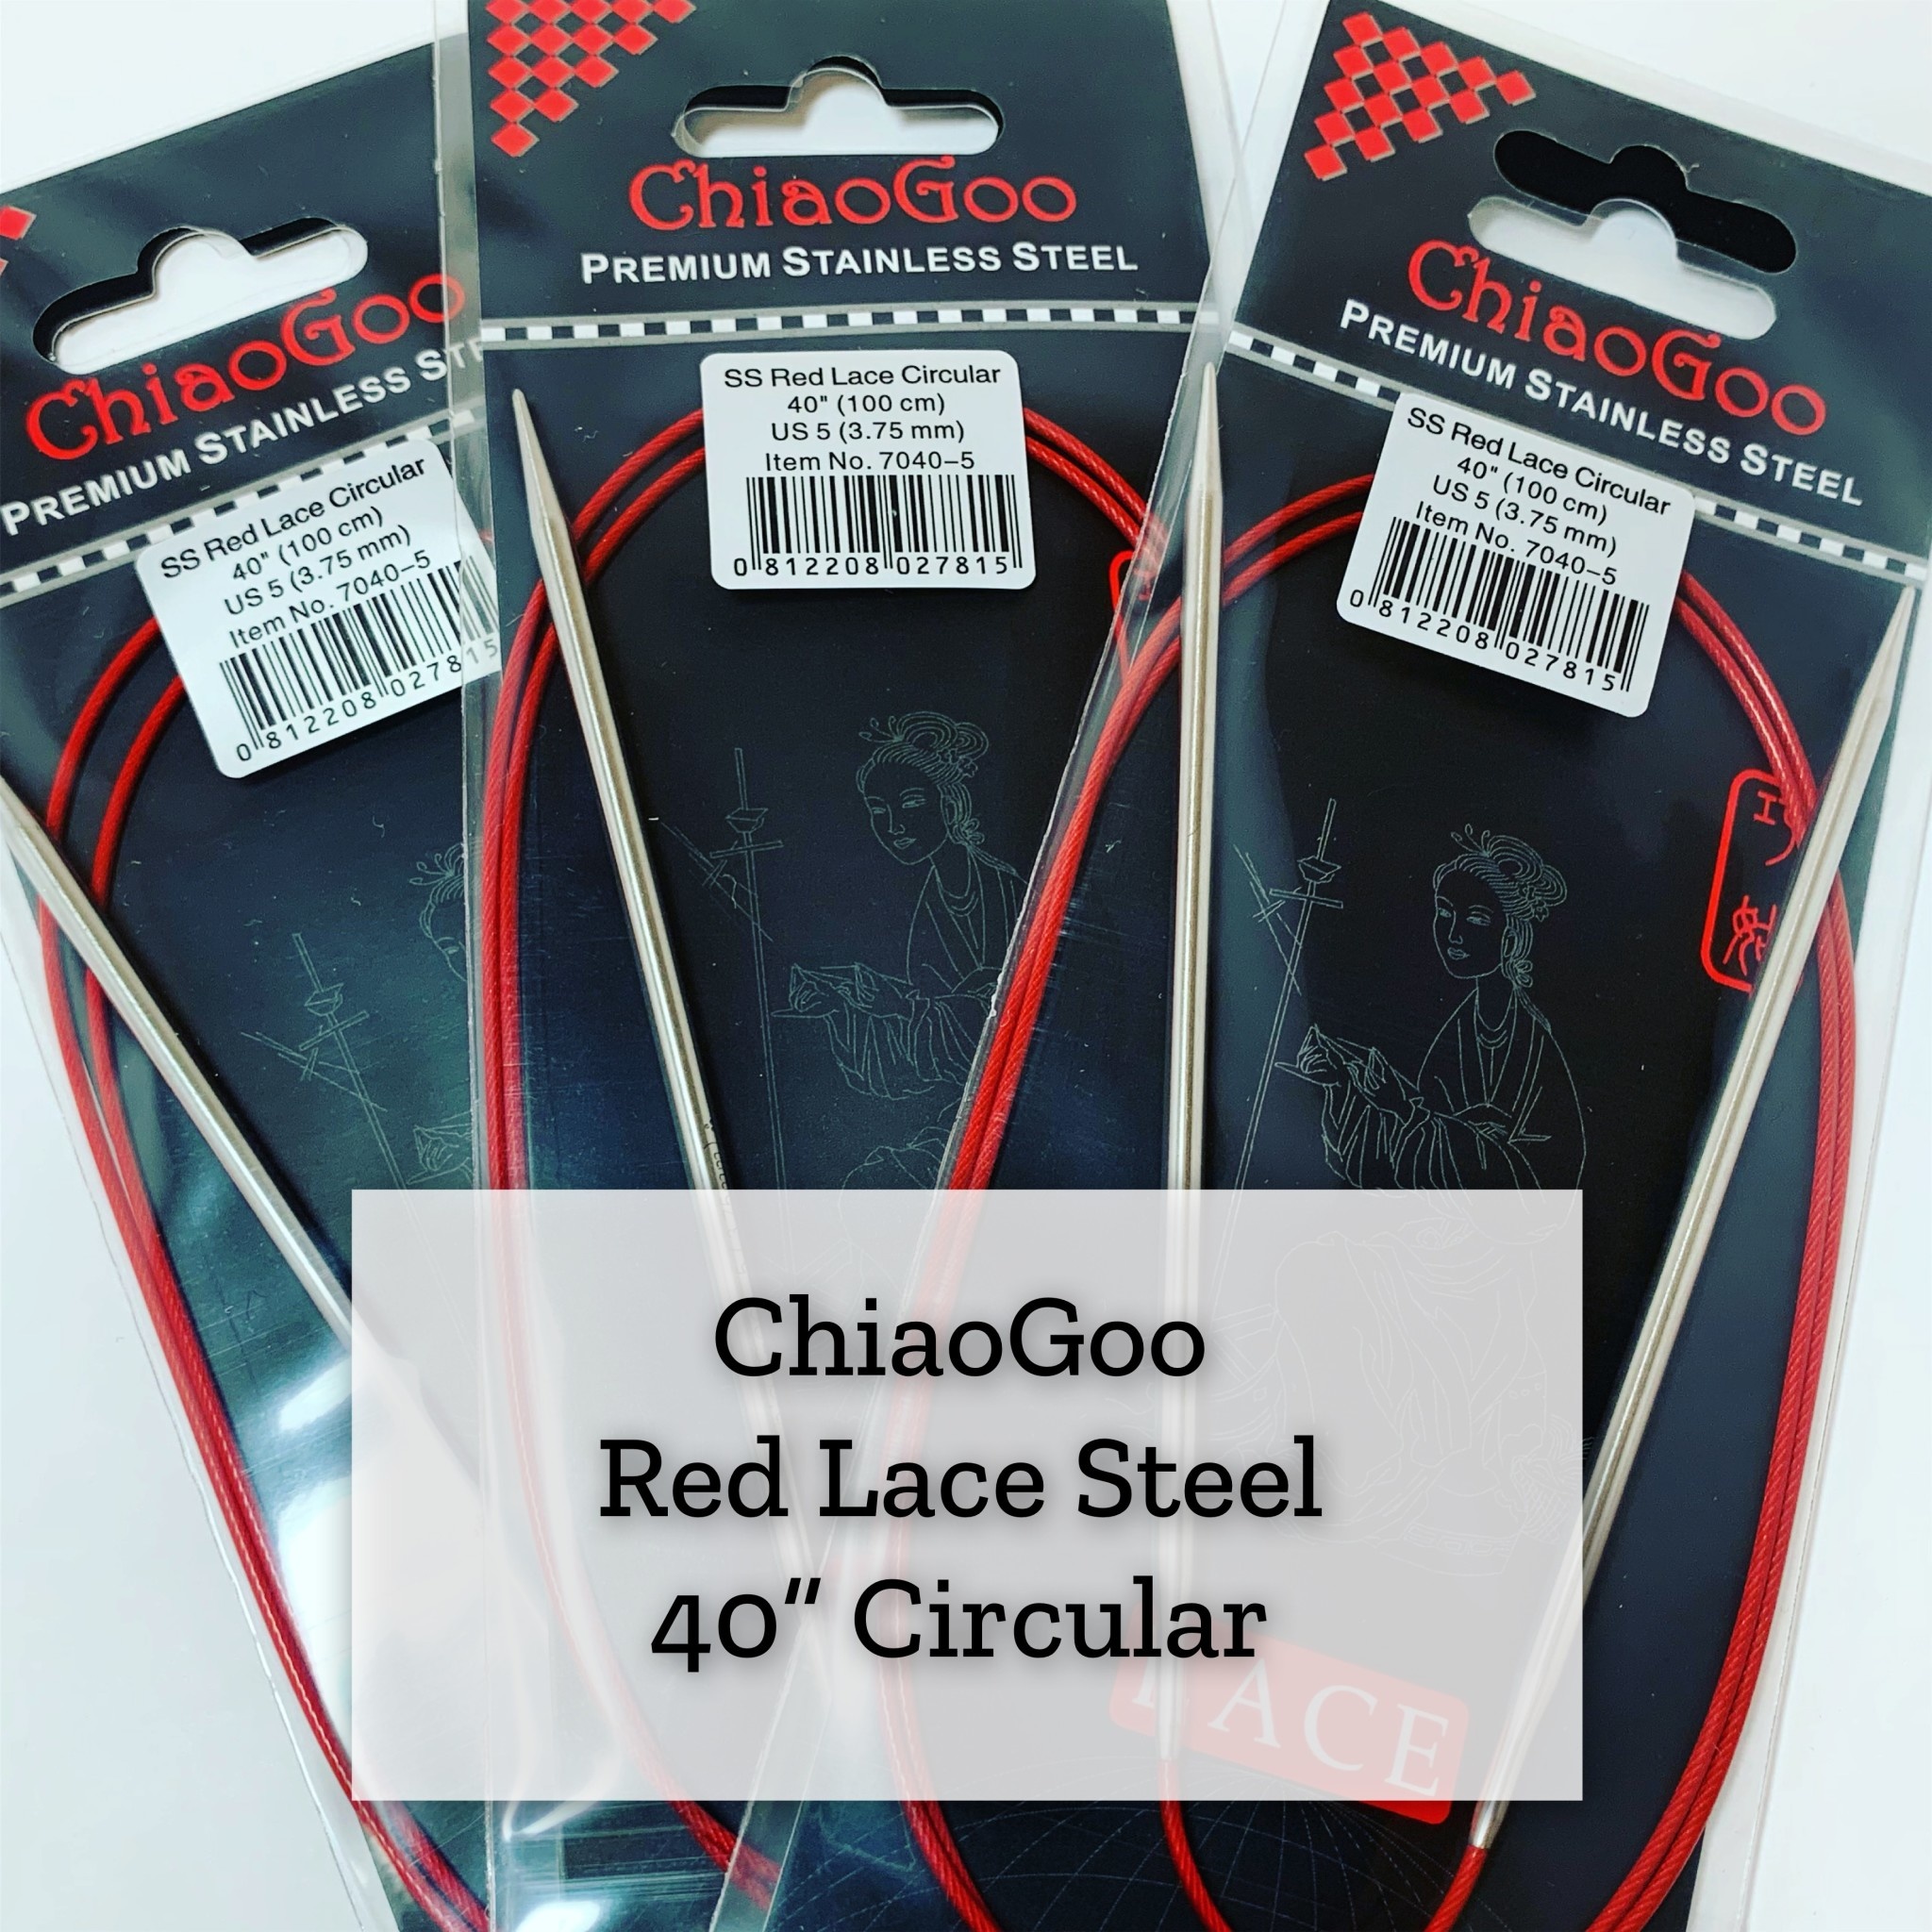 ChiaoGoo Red Lace Steel - 40" 3.75 mm